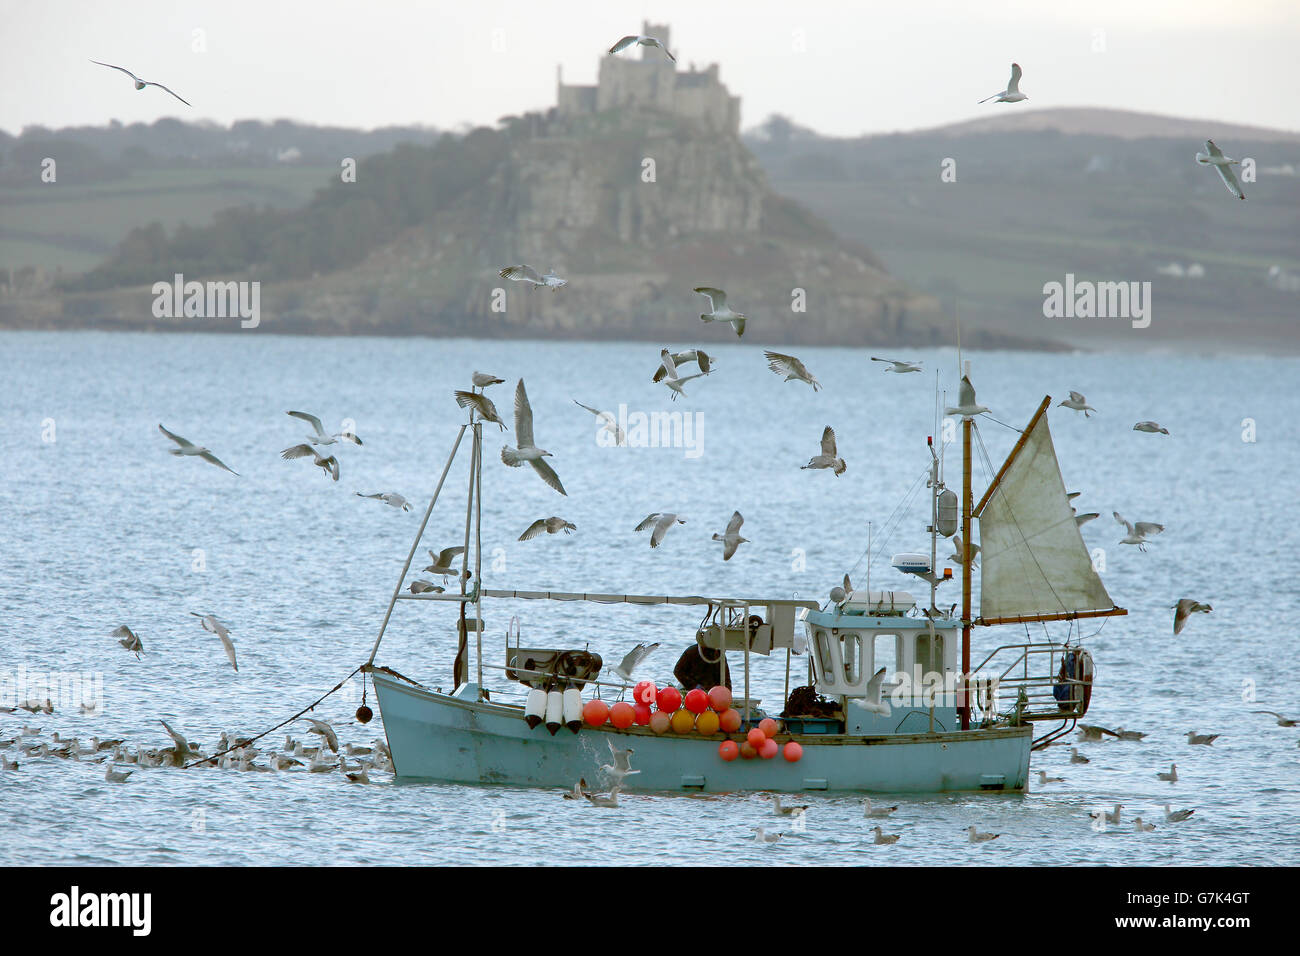 Gulls around a small fishing boat, Mount's Bay, Cornwall, England, UK. Stock Photo